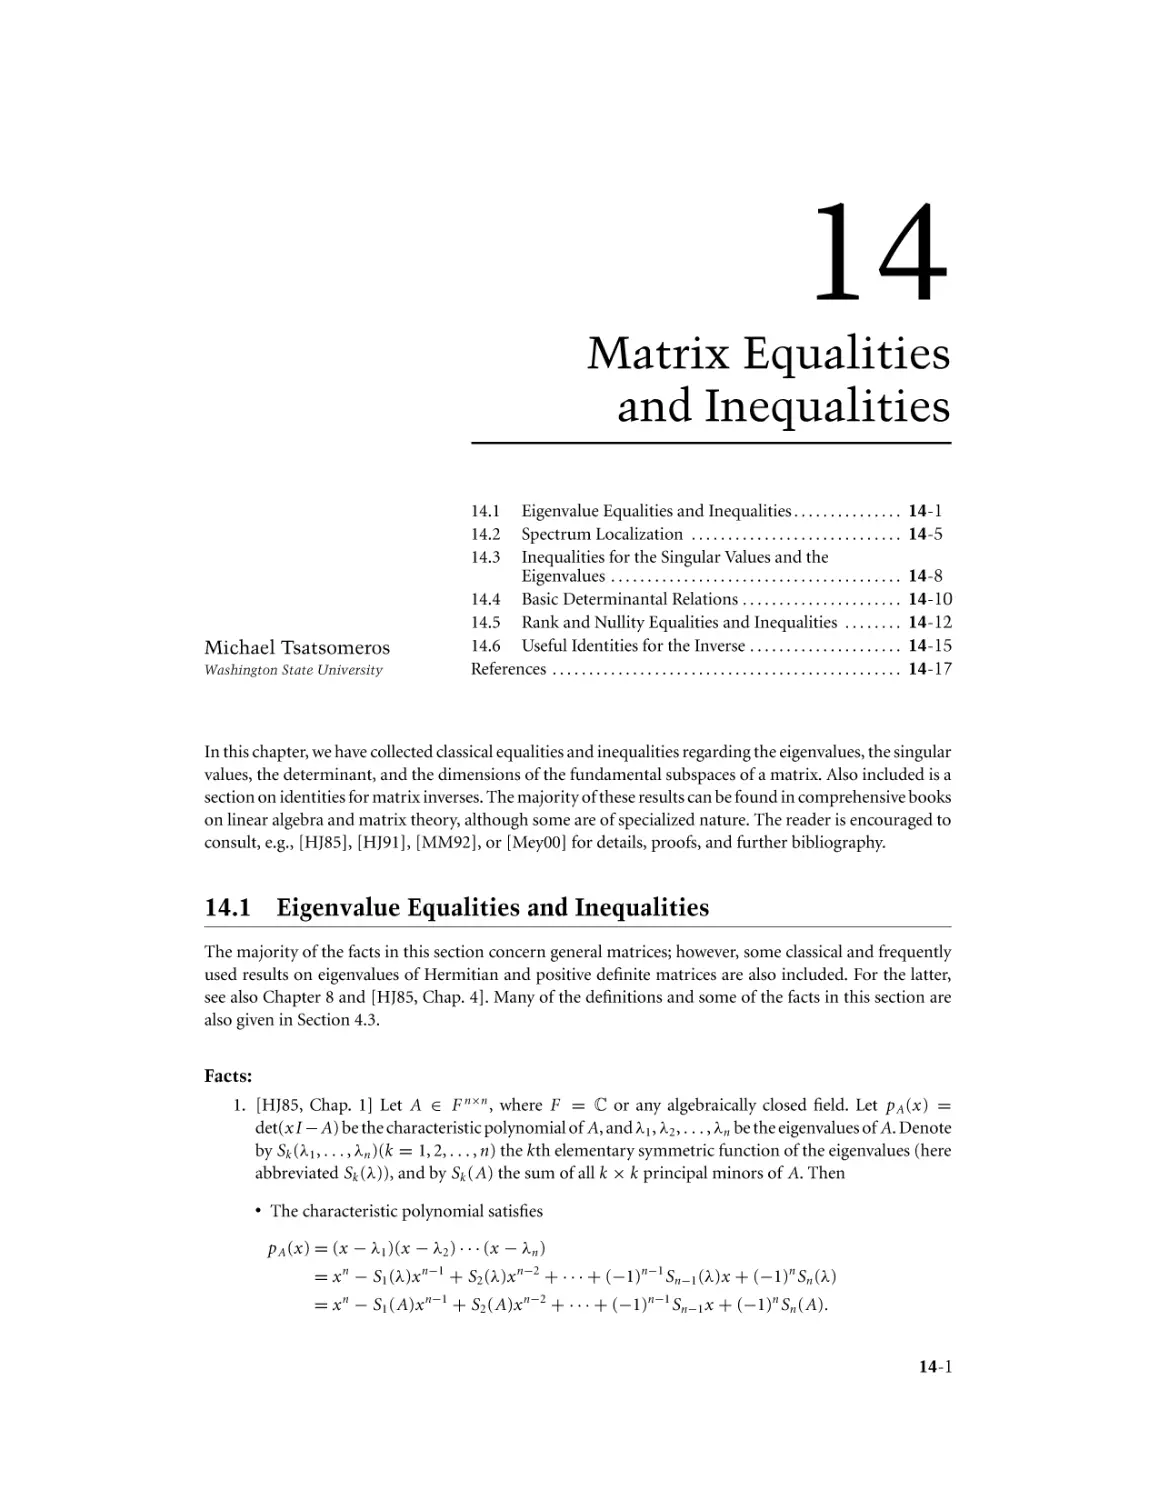 Chapter 14. Matrix Equalities and Inequalities